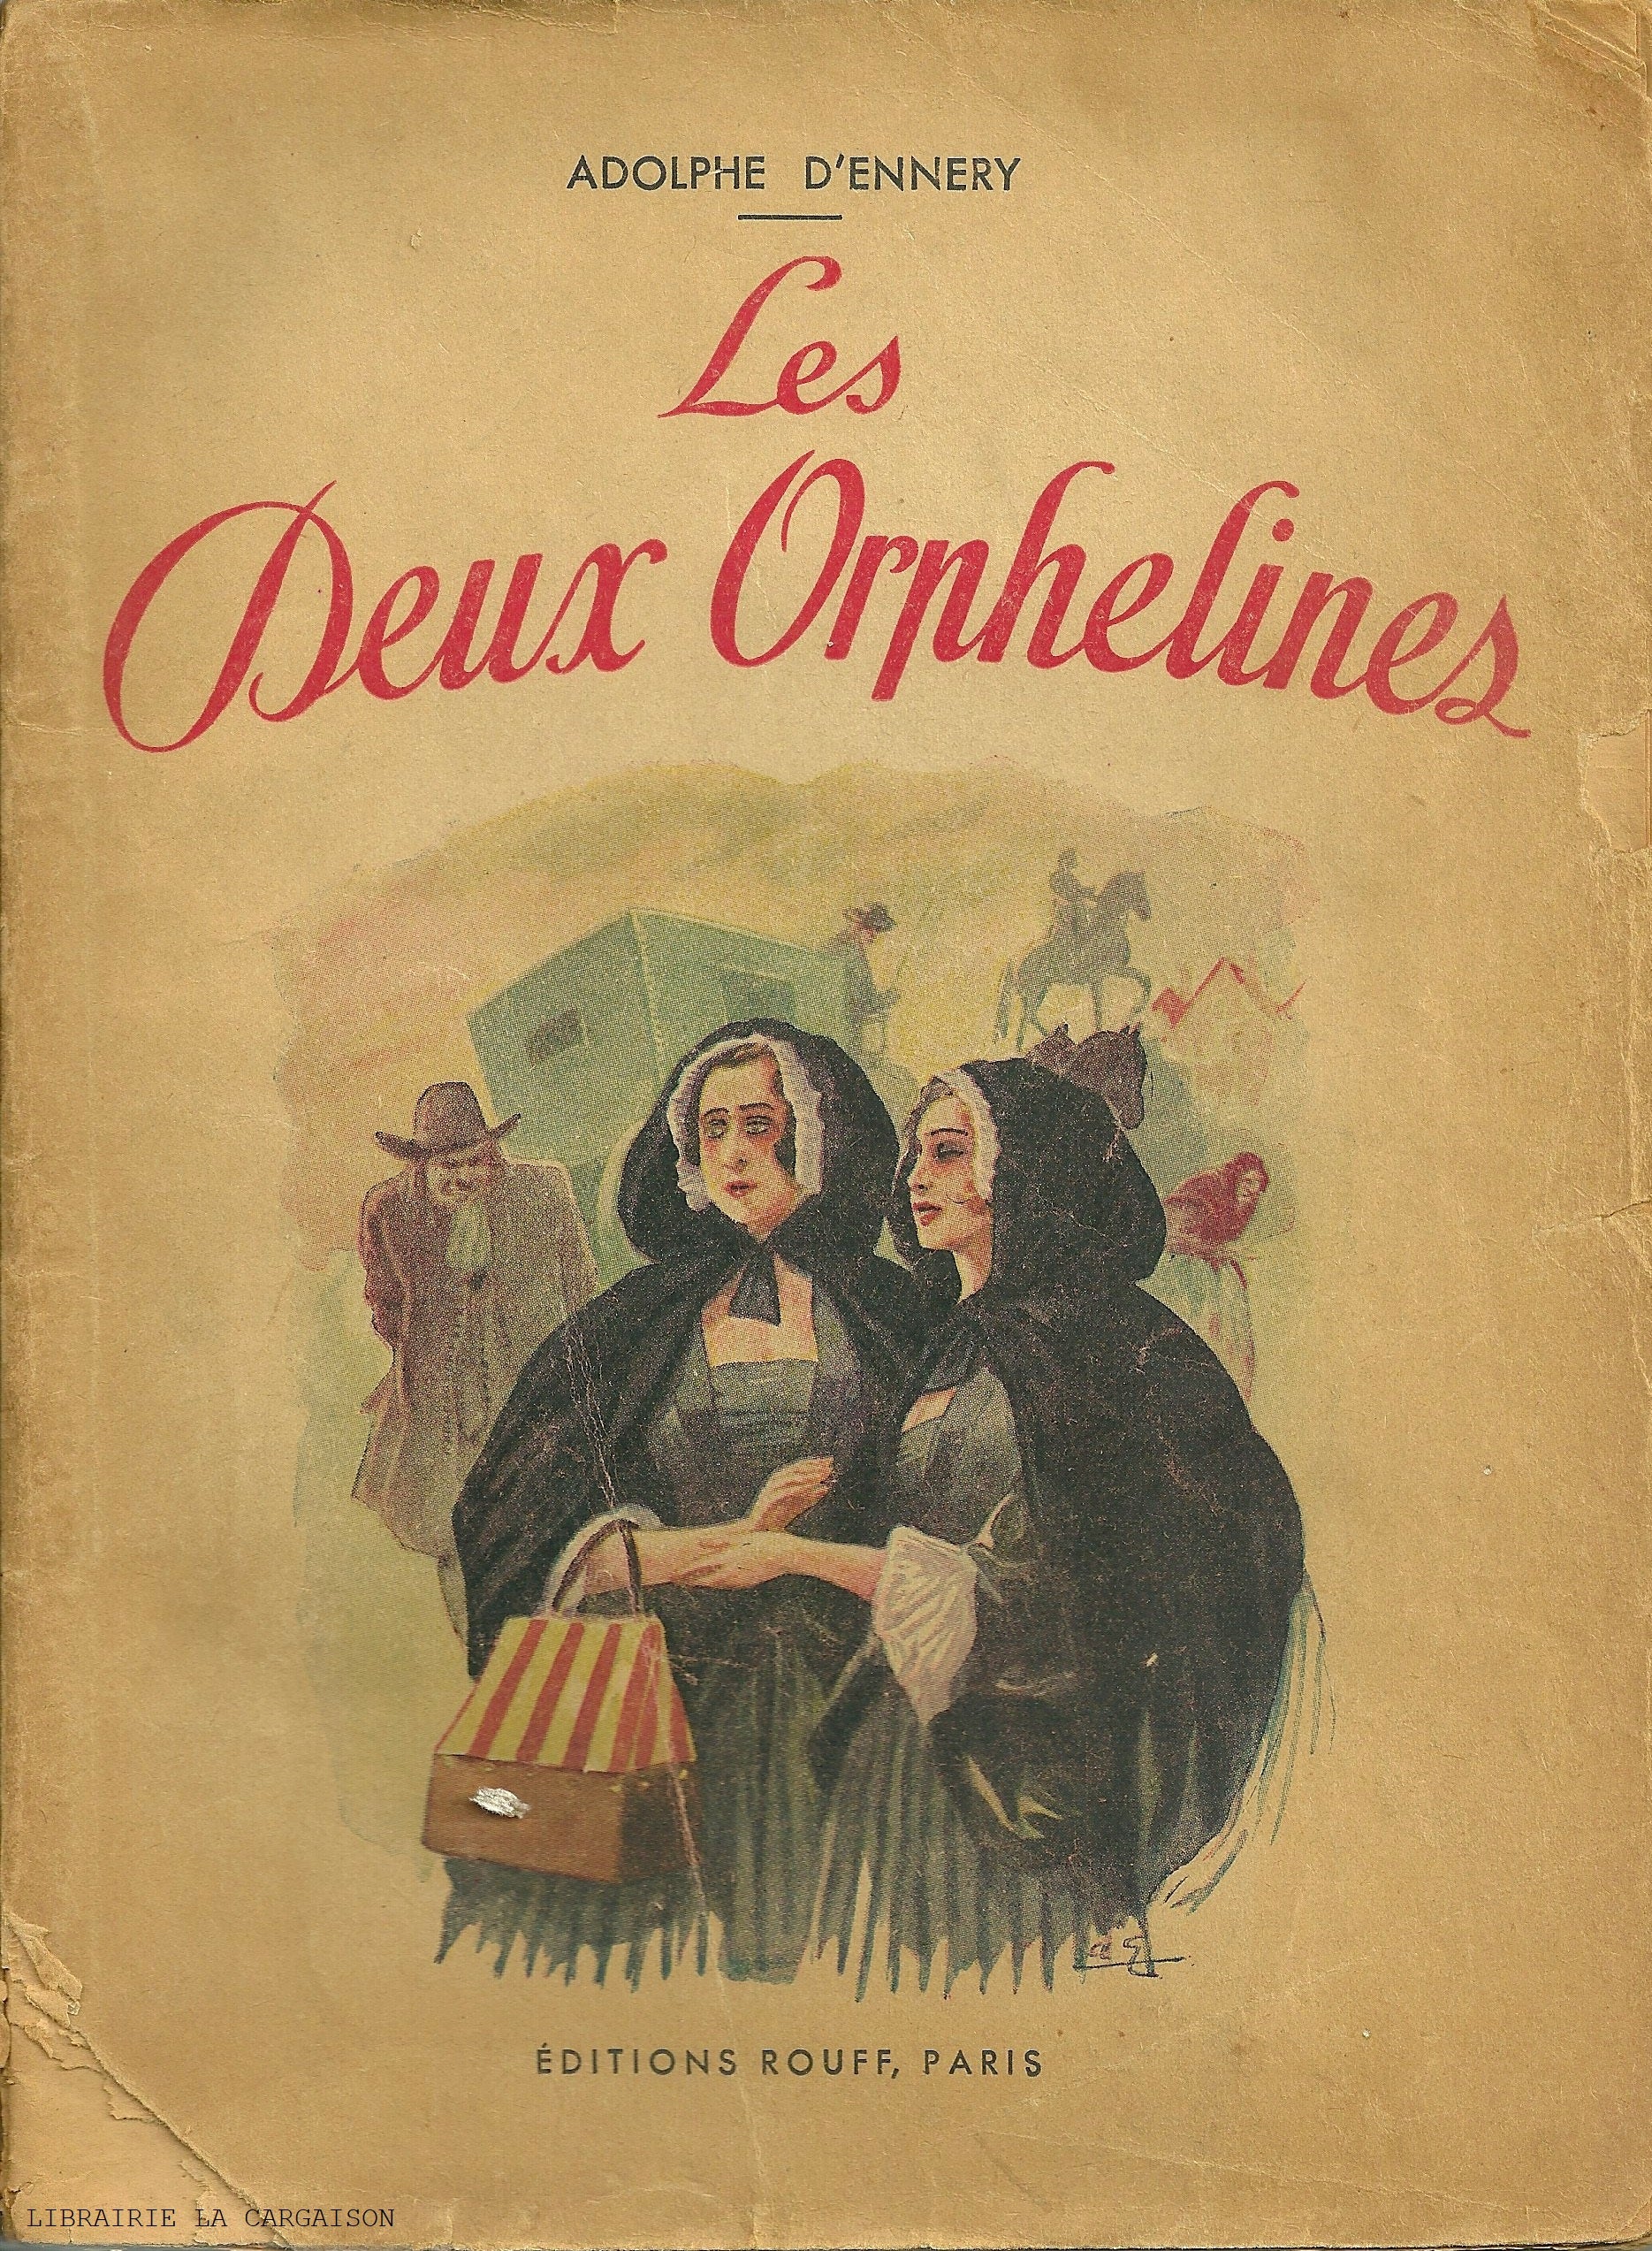 ENNERY, ADOLPHE D'. Deux Orphelines (Les)